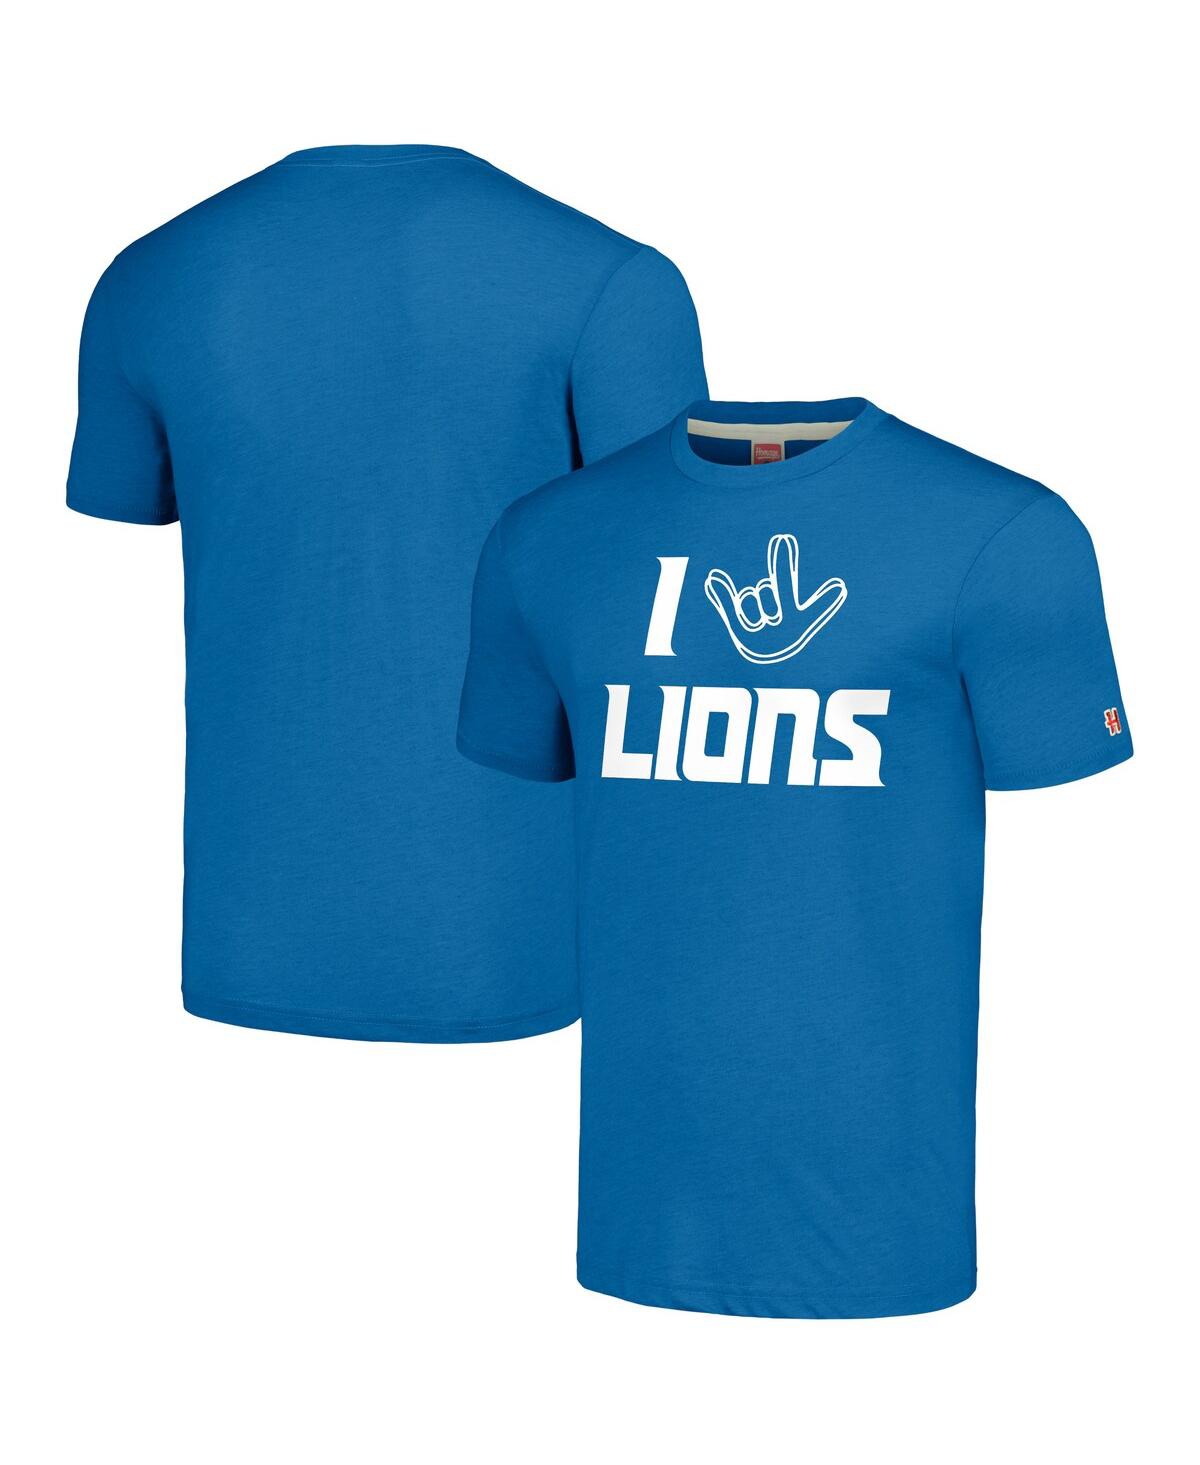 Men's and Women's Homage Blue Detroit Lions The Nfl Asl Collection by Love Sign Tri-Blend T-shirt - Blue